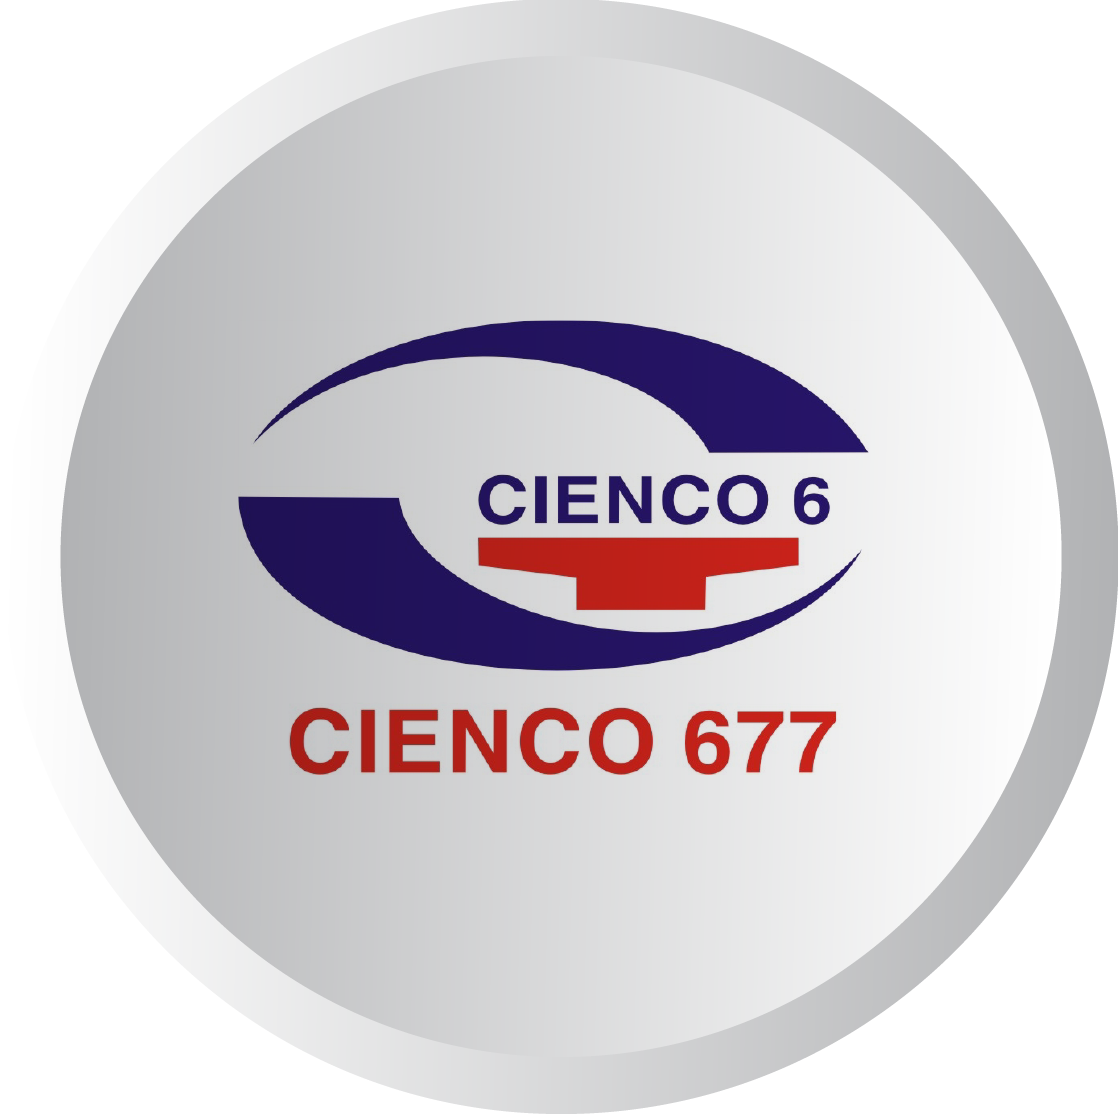 CIENCO 677